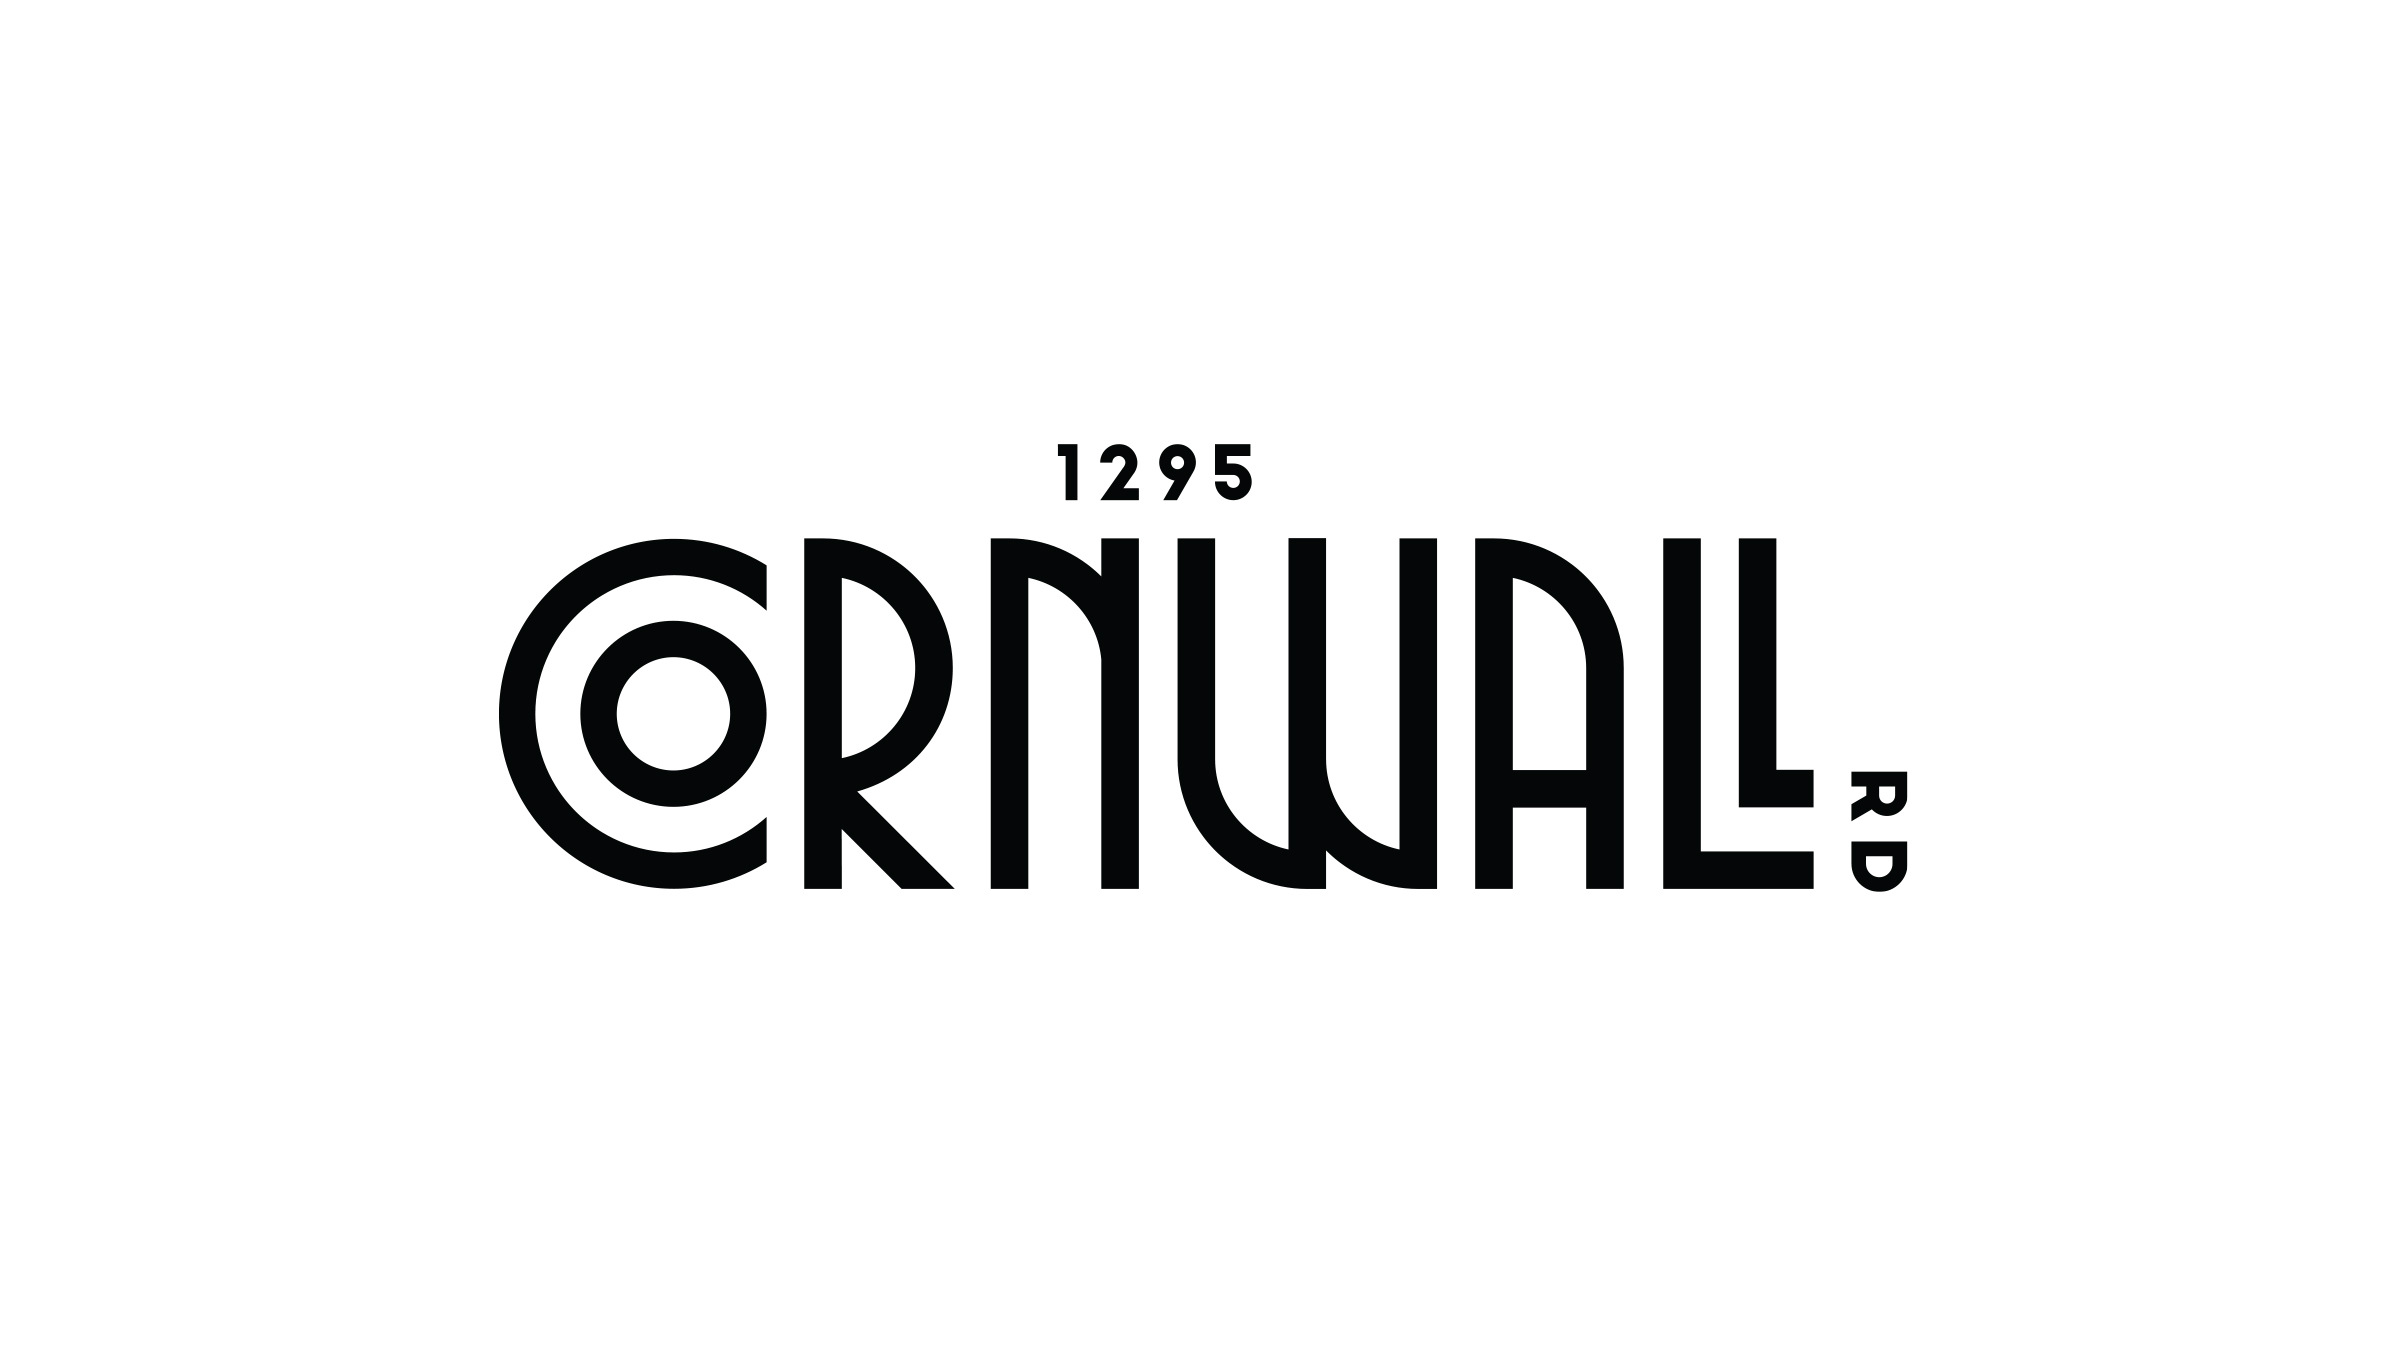 Cornwall-logo